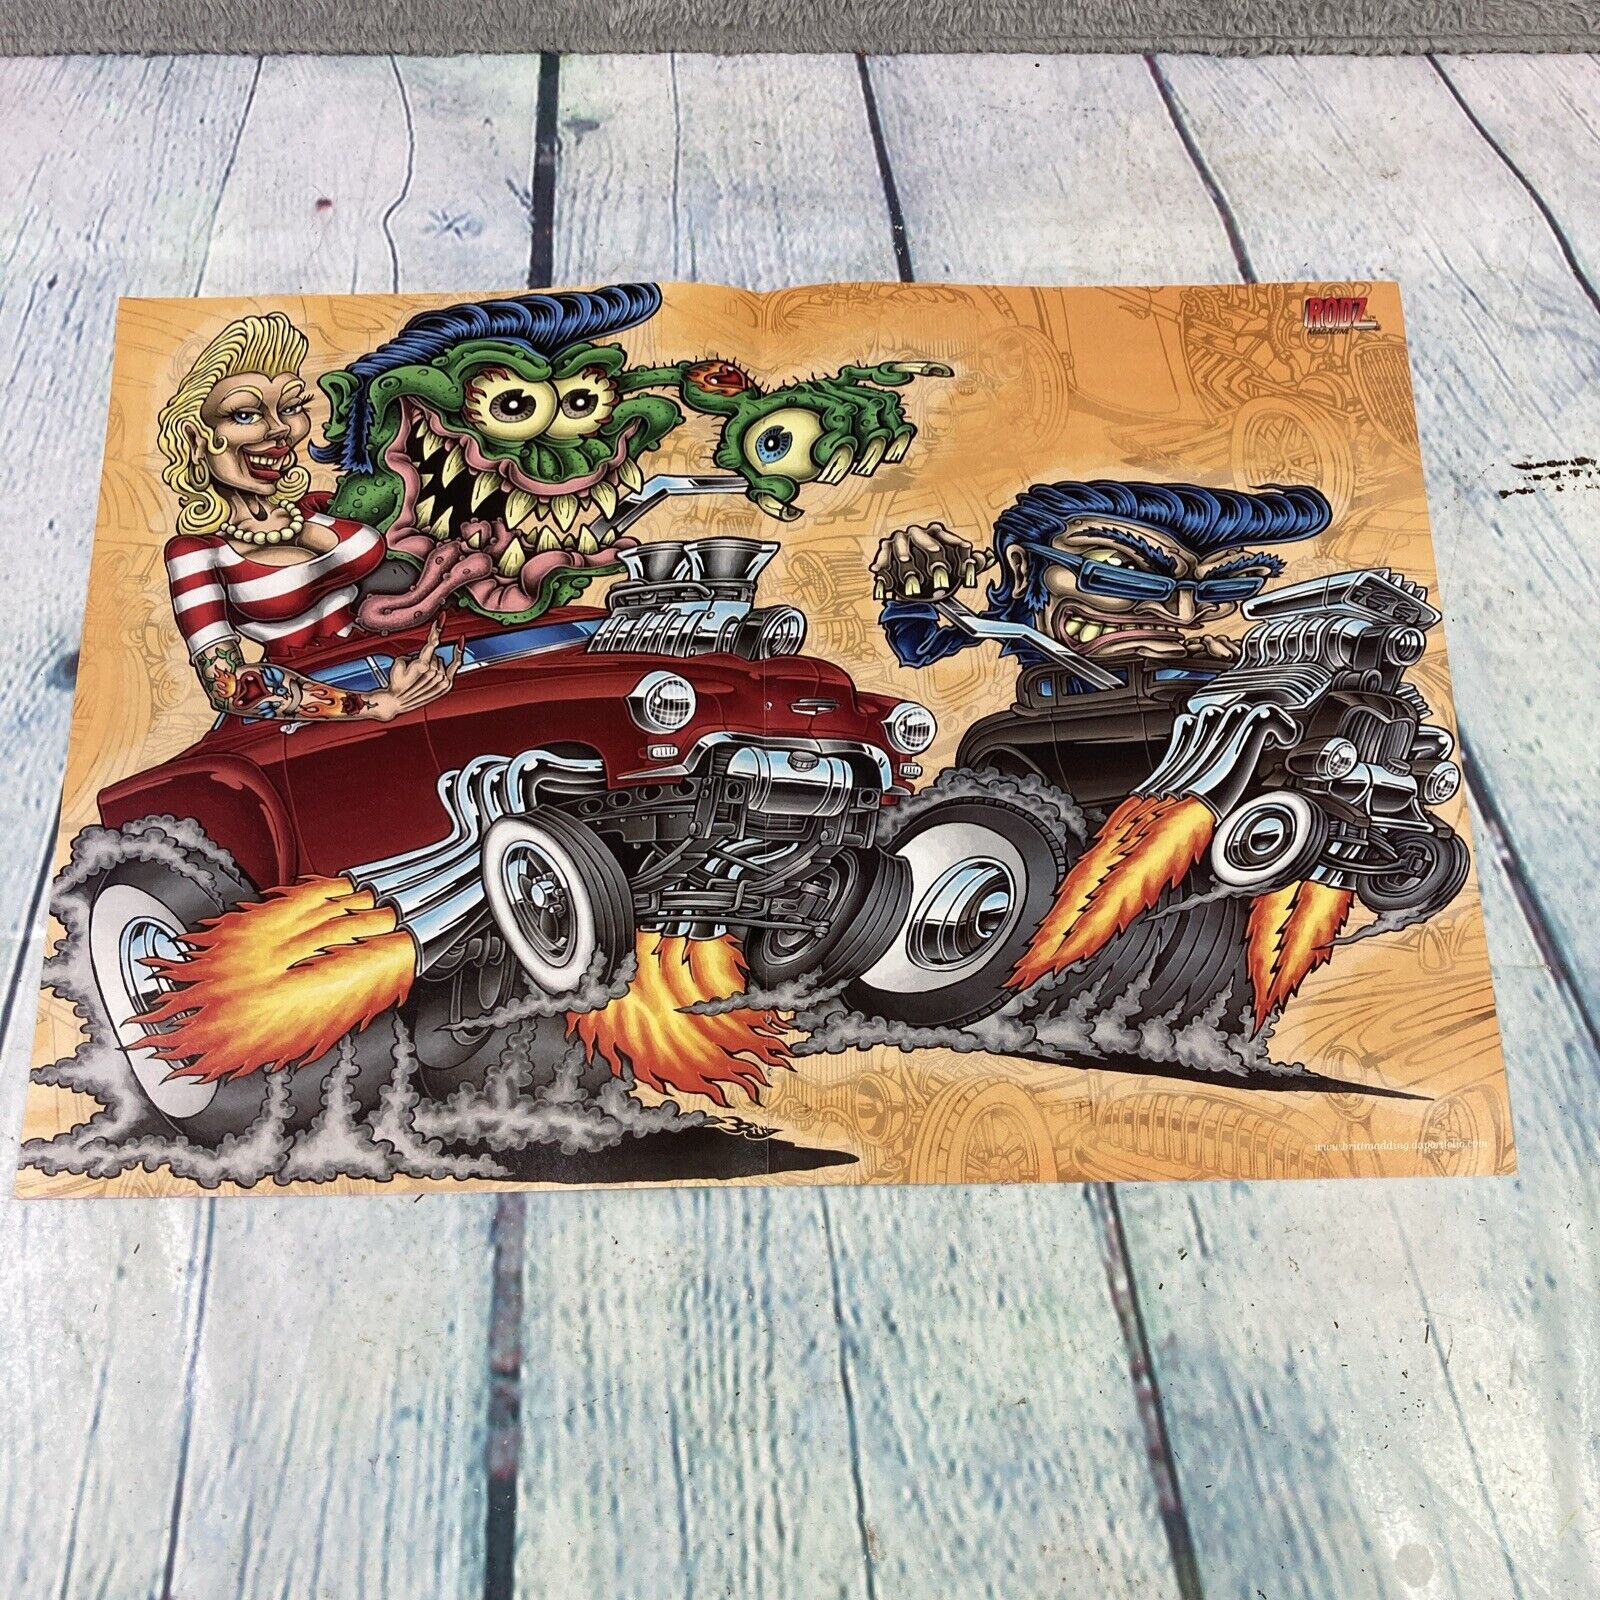 2014 Print Ad / Poster Hot Rod Cars Cartoon Promo Art Centerfold Garage Pin Up